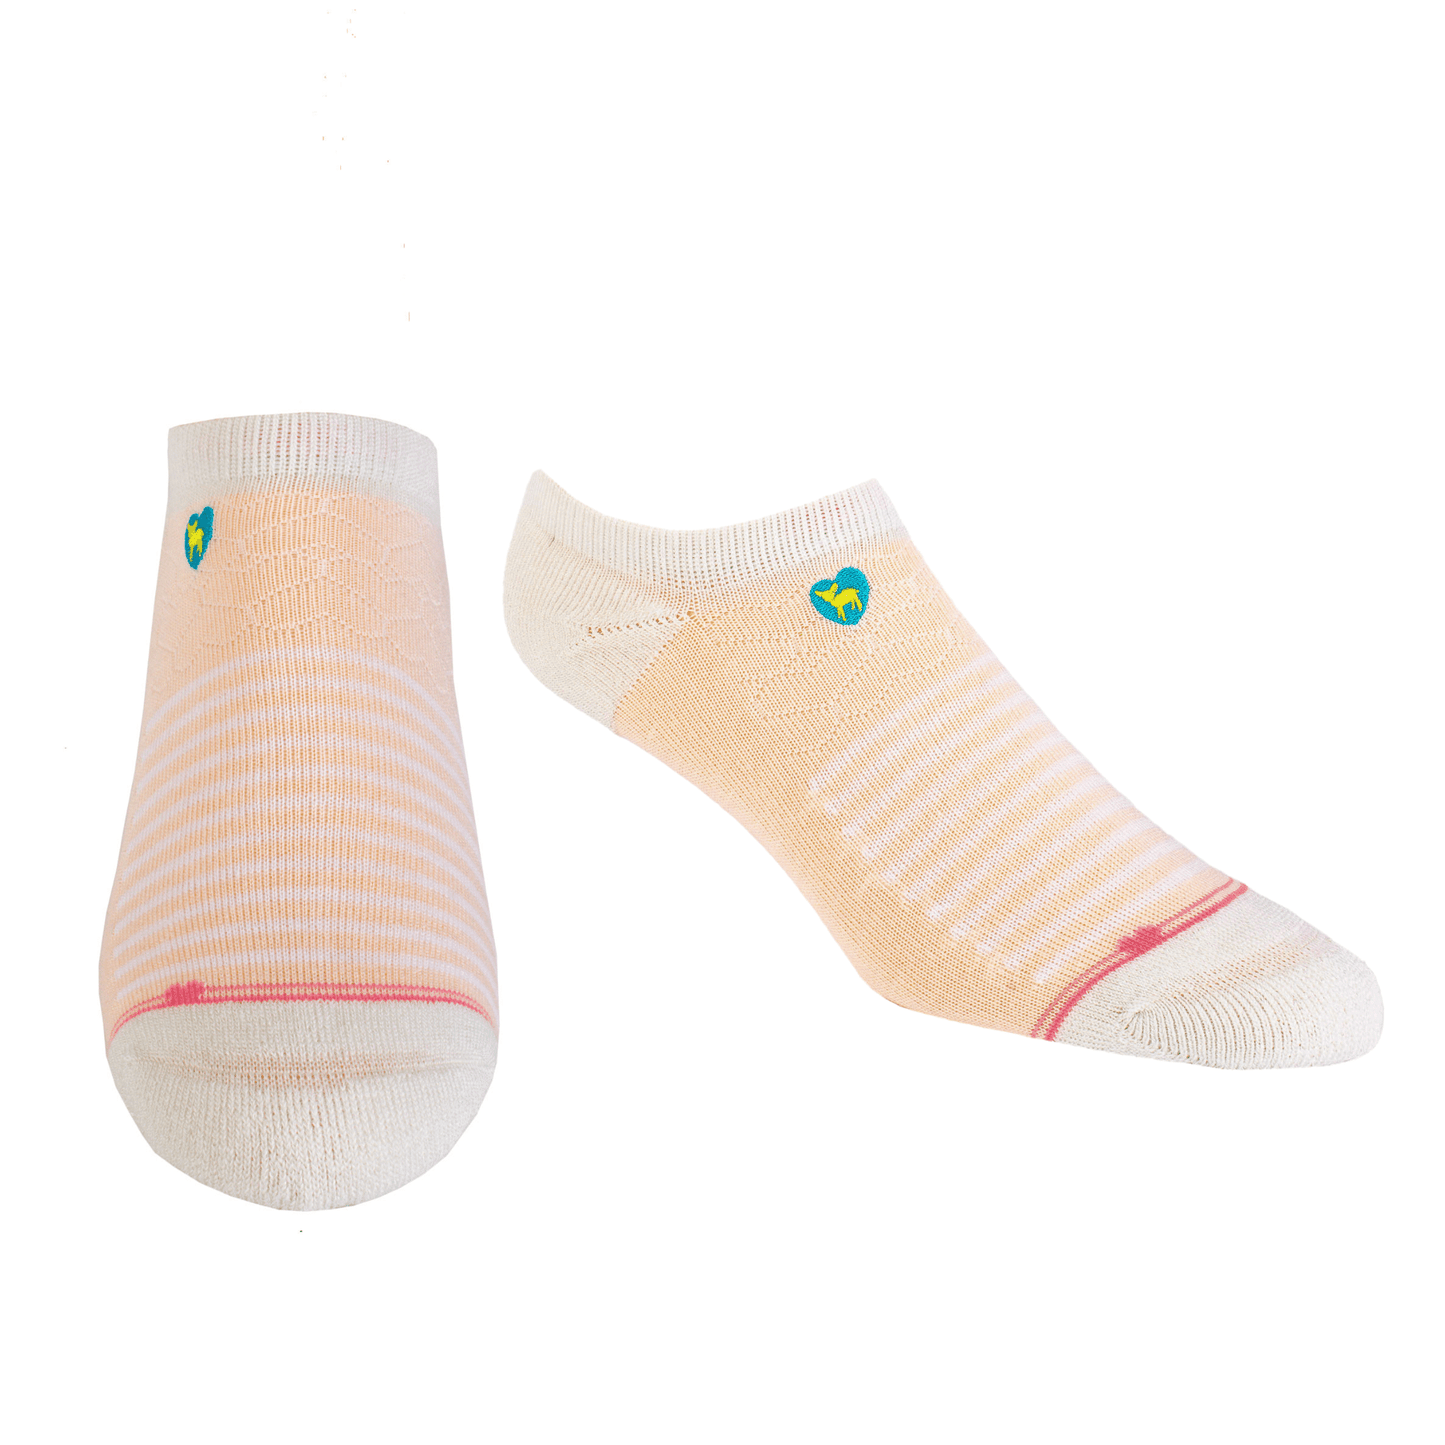 Bamboo Socks, Everyday Ankle